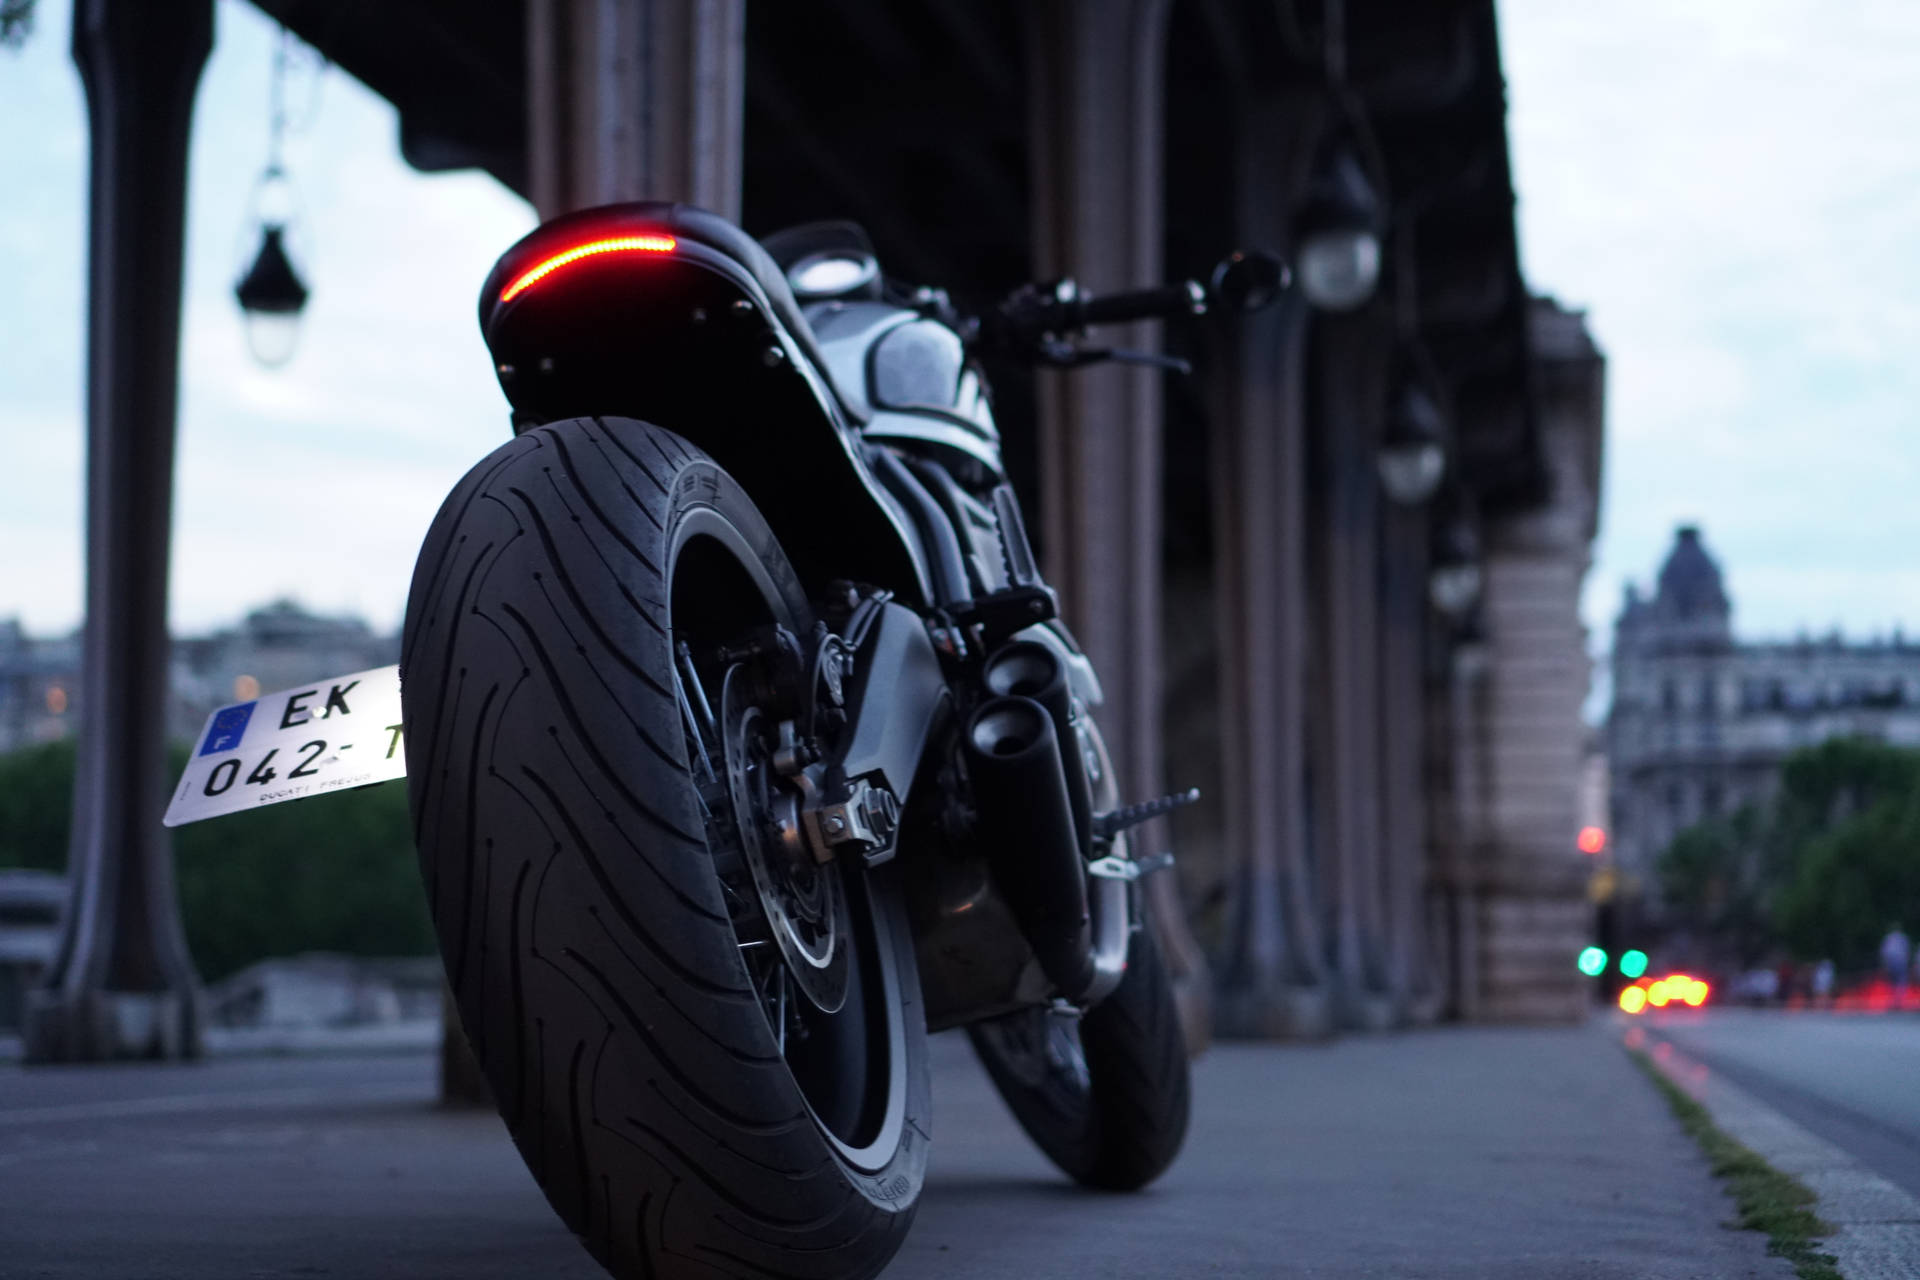 Top 999+ Ducati Wallpaper Full HD, 4K✅Free to Use